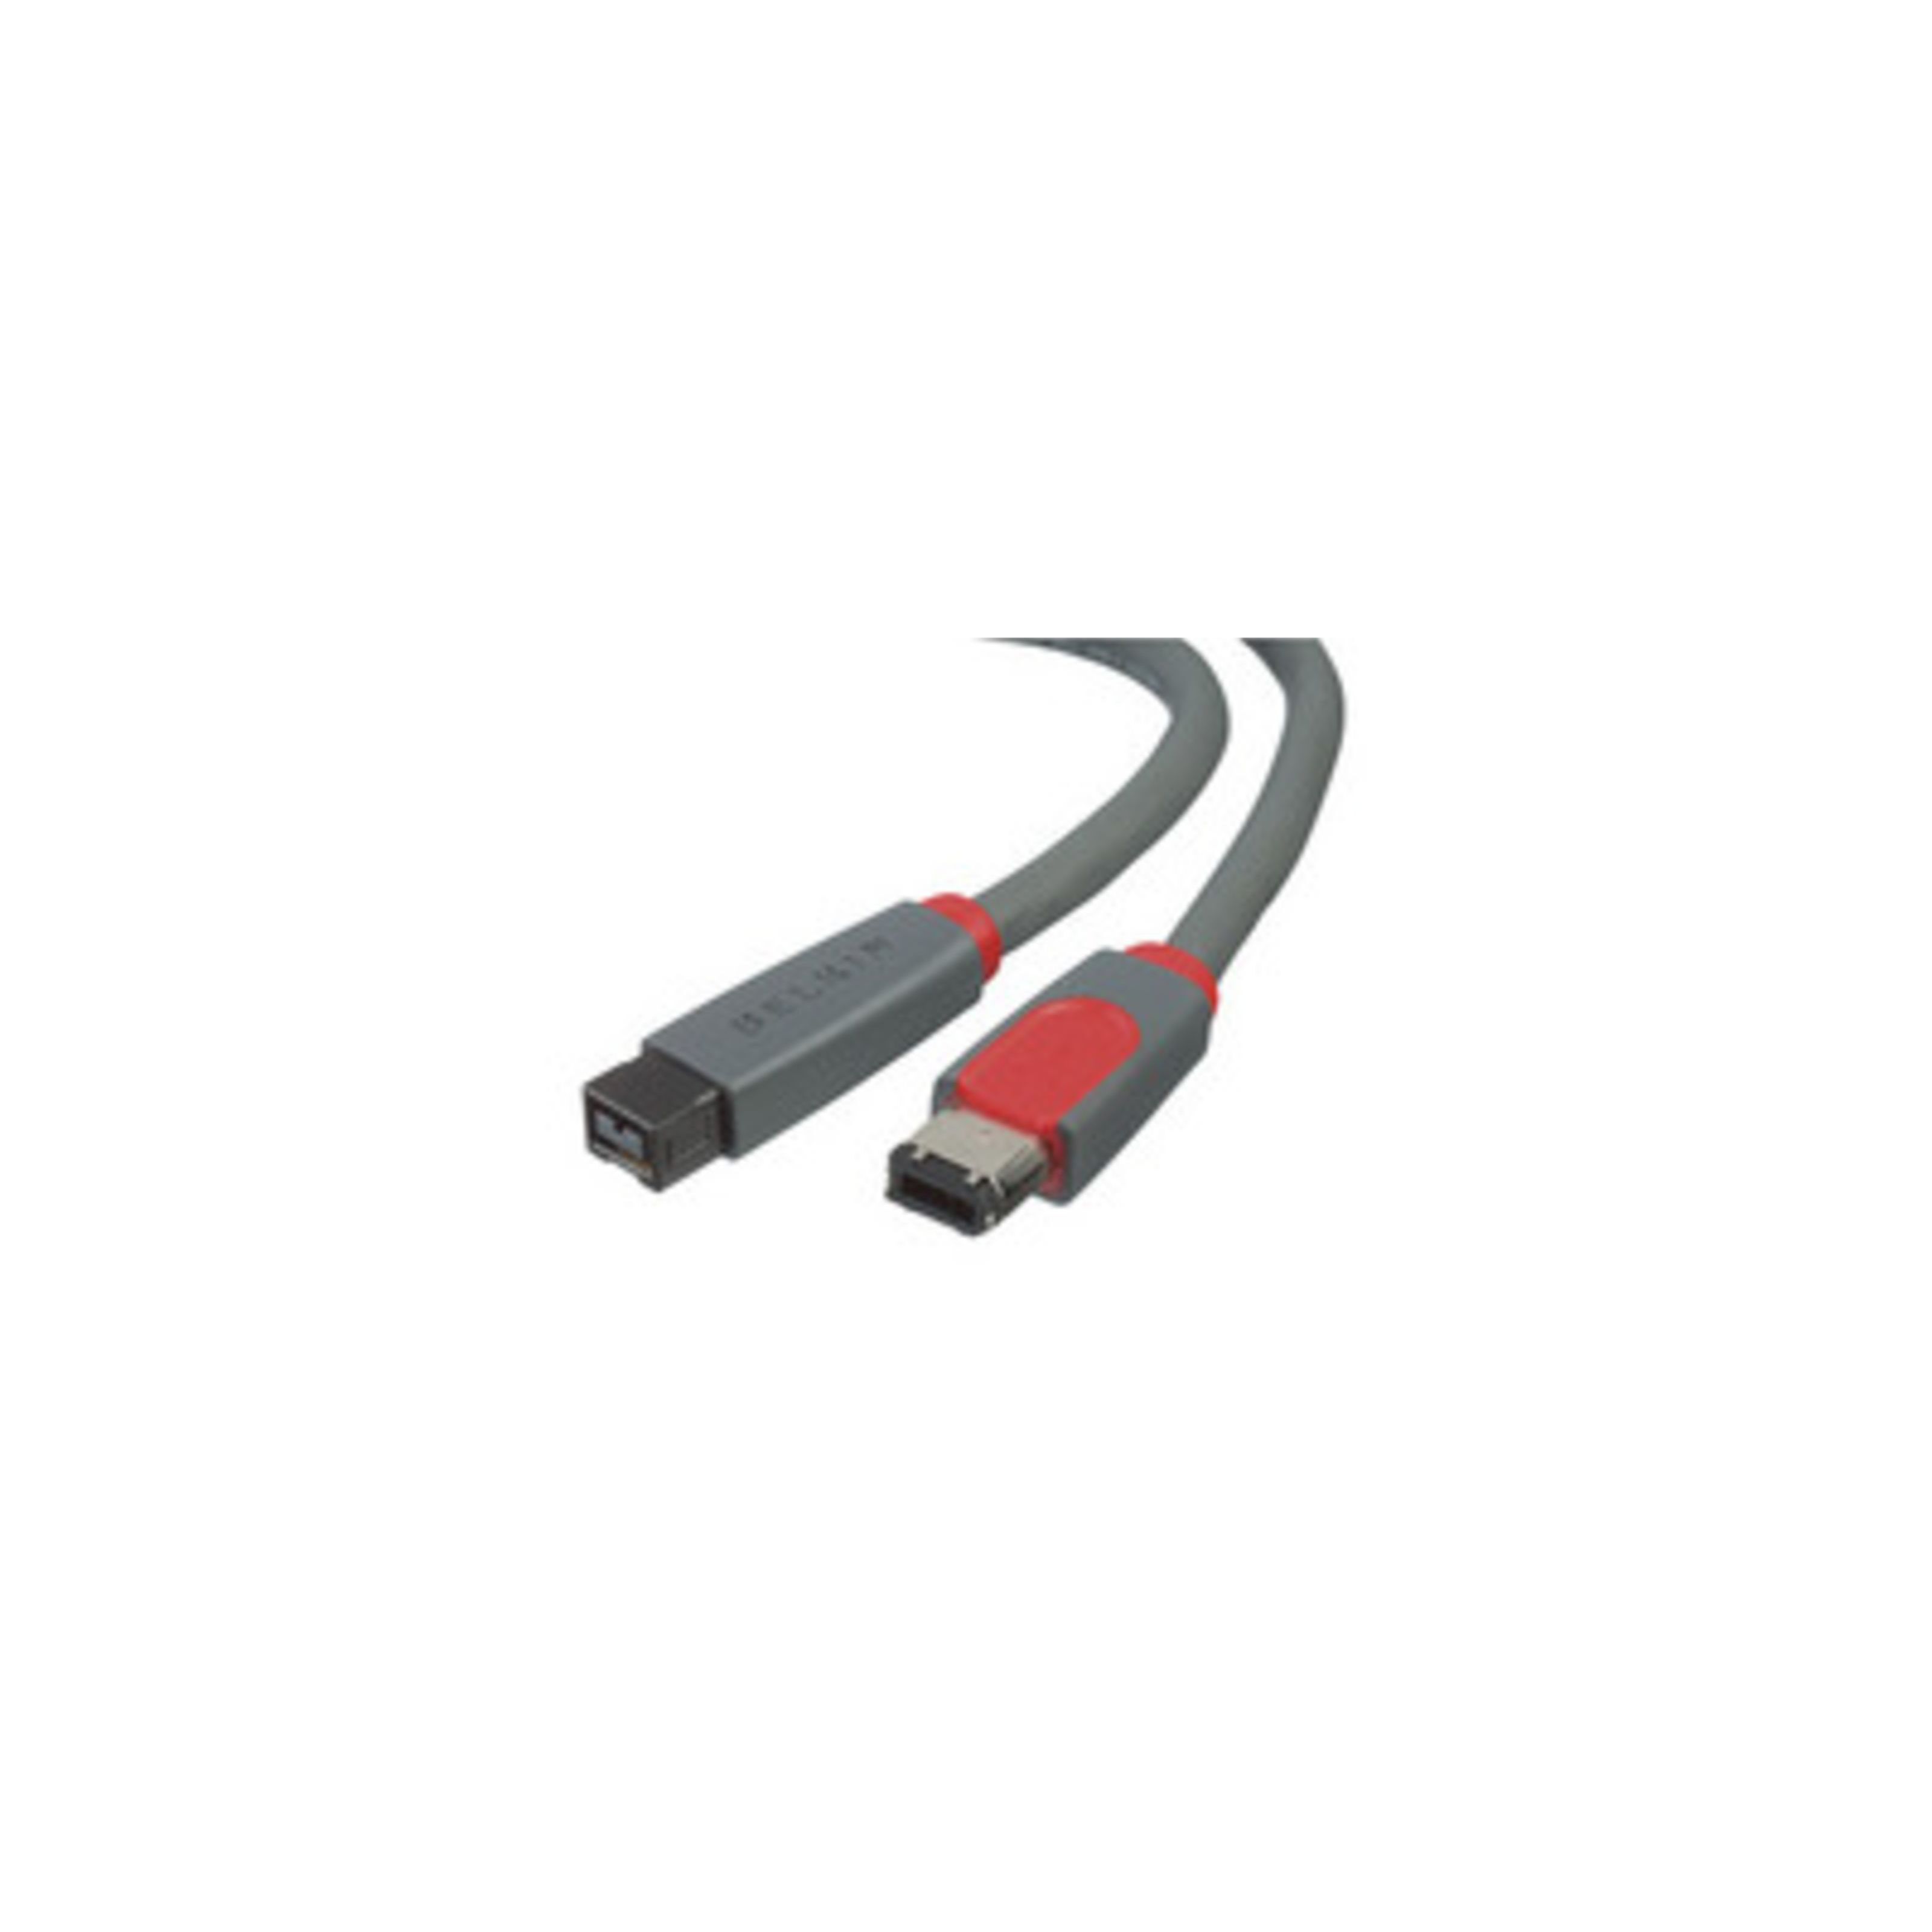 DELOCK - FireWire-Kabel 9P/6P FW800  FW400 6PIN, 3m